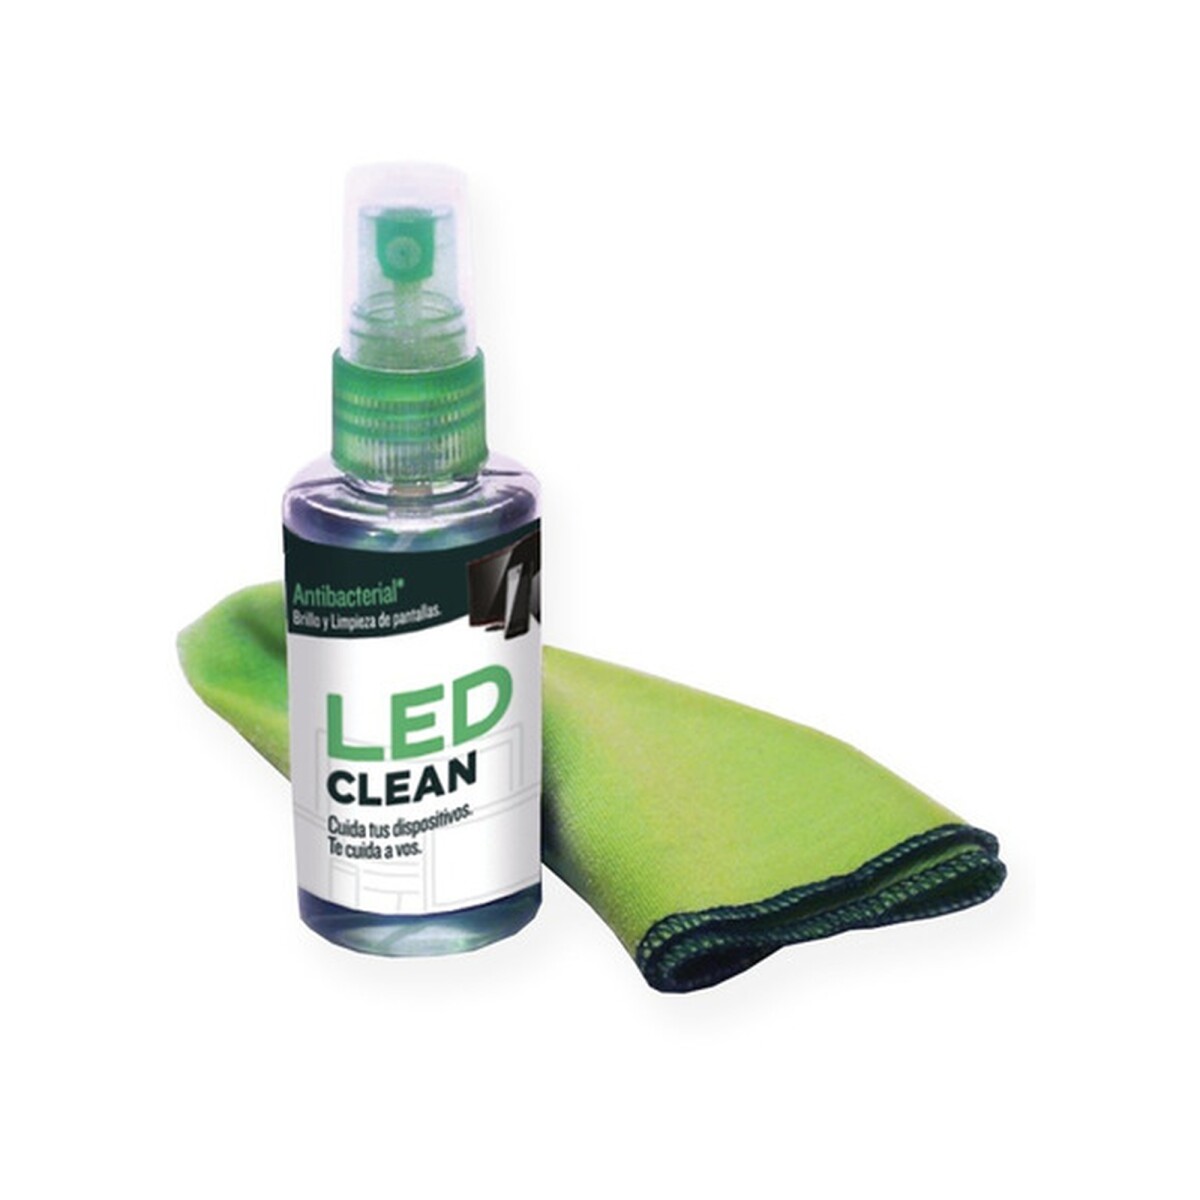 Led clean CLEER/Glantz 